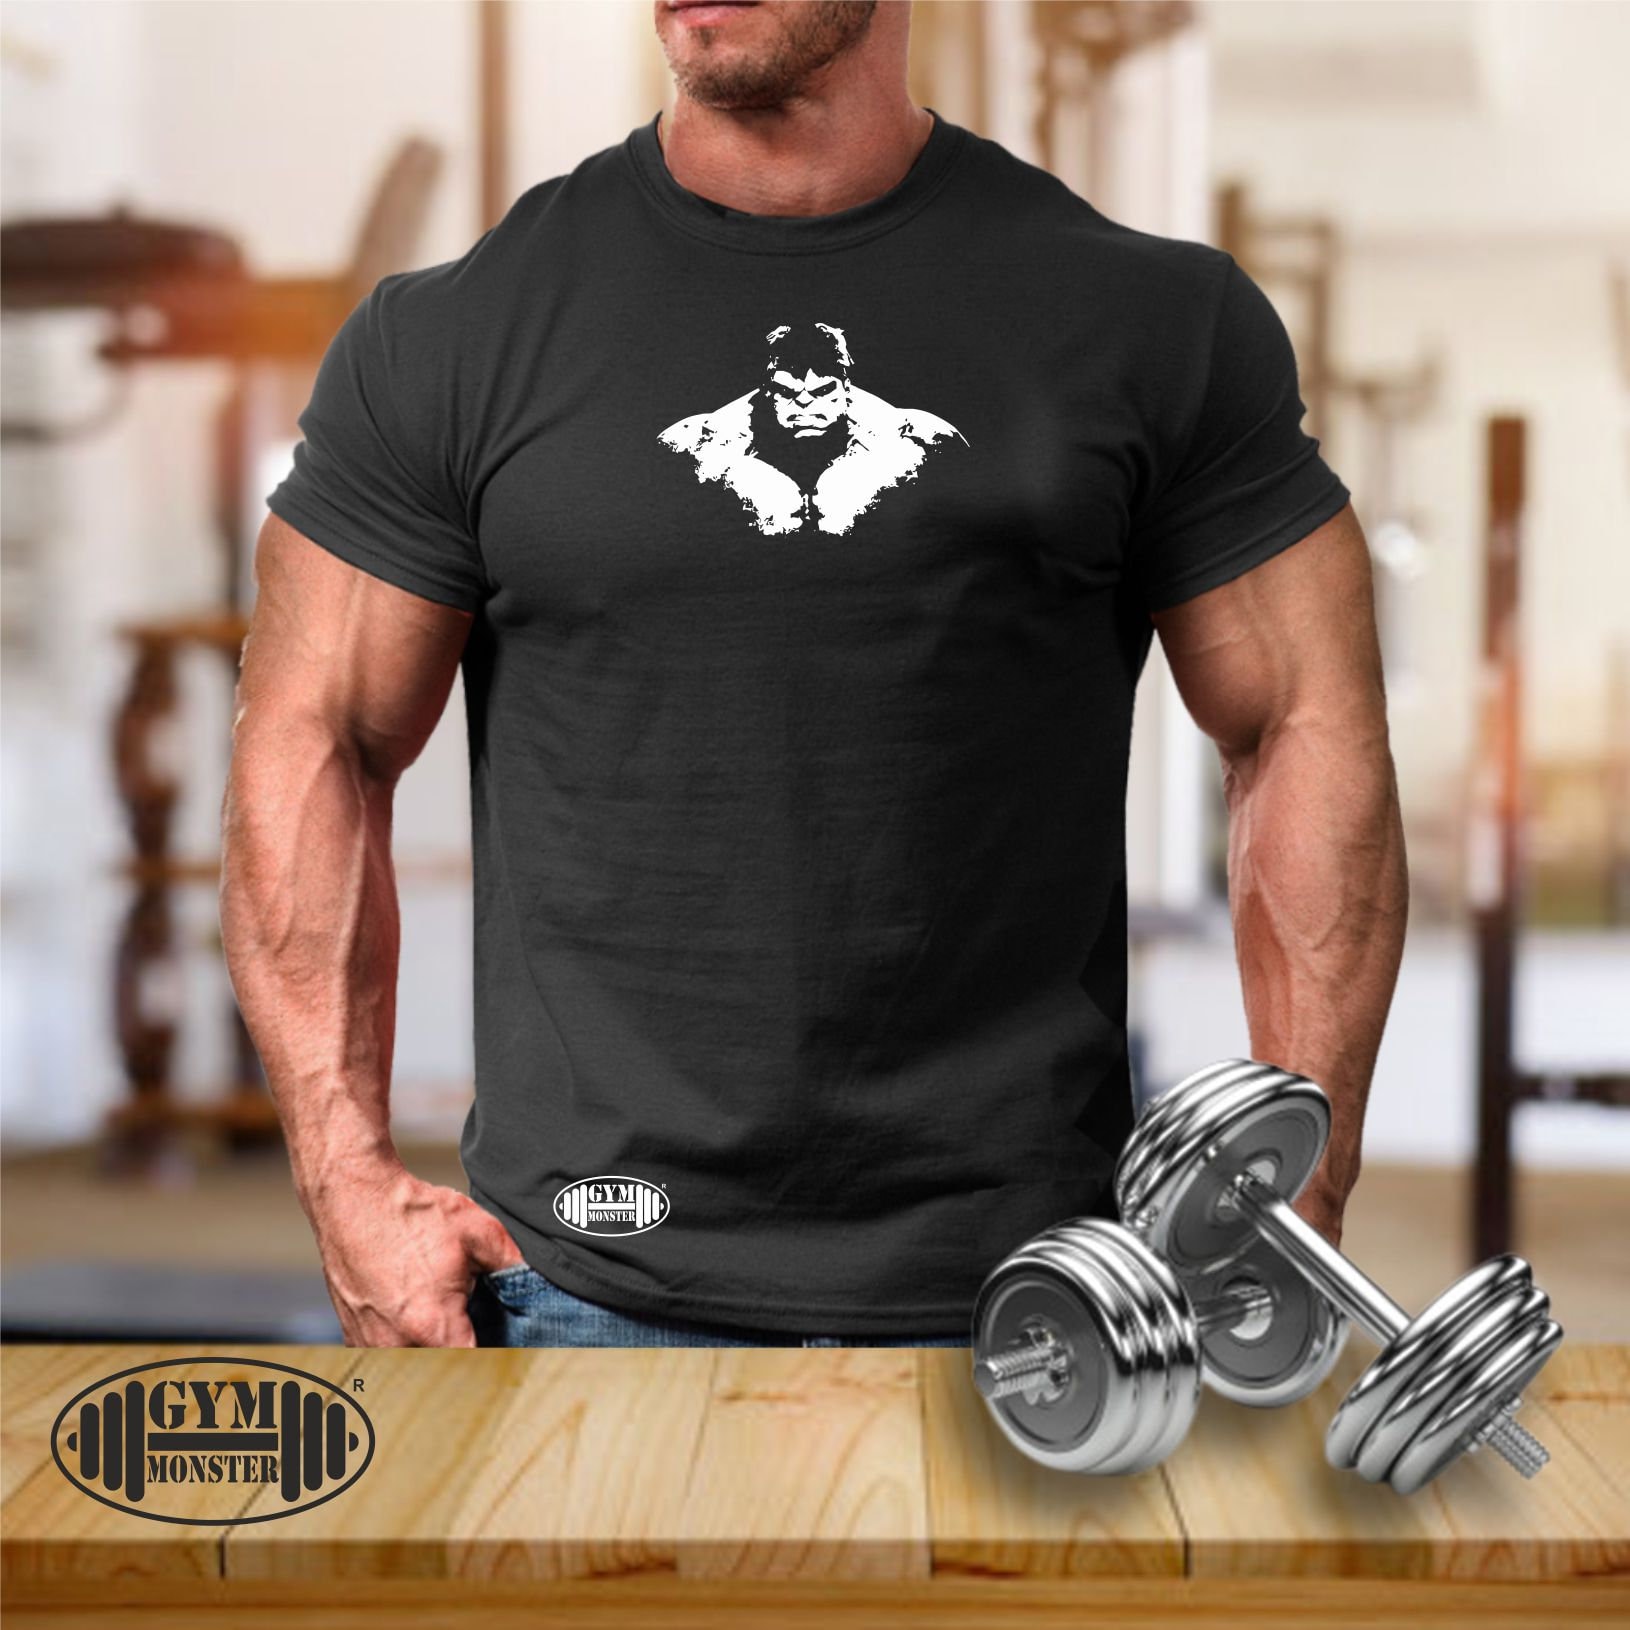 ZDFER Tshirts for Men Short Sleeve Crewneck Muscle Gym Workout